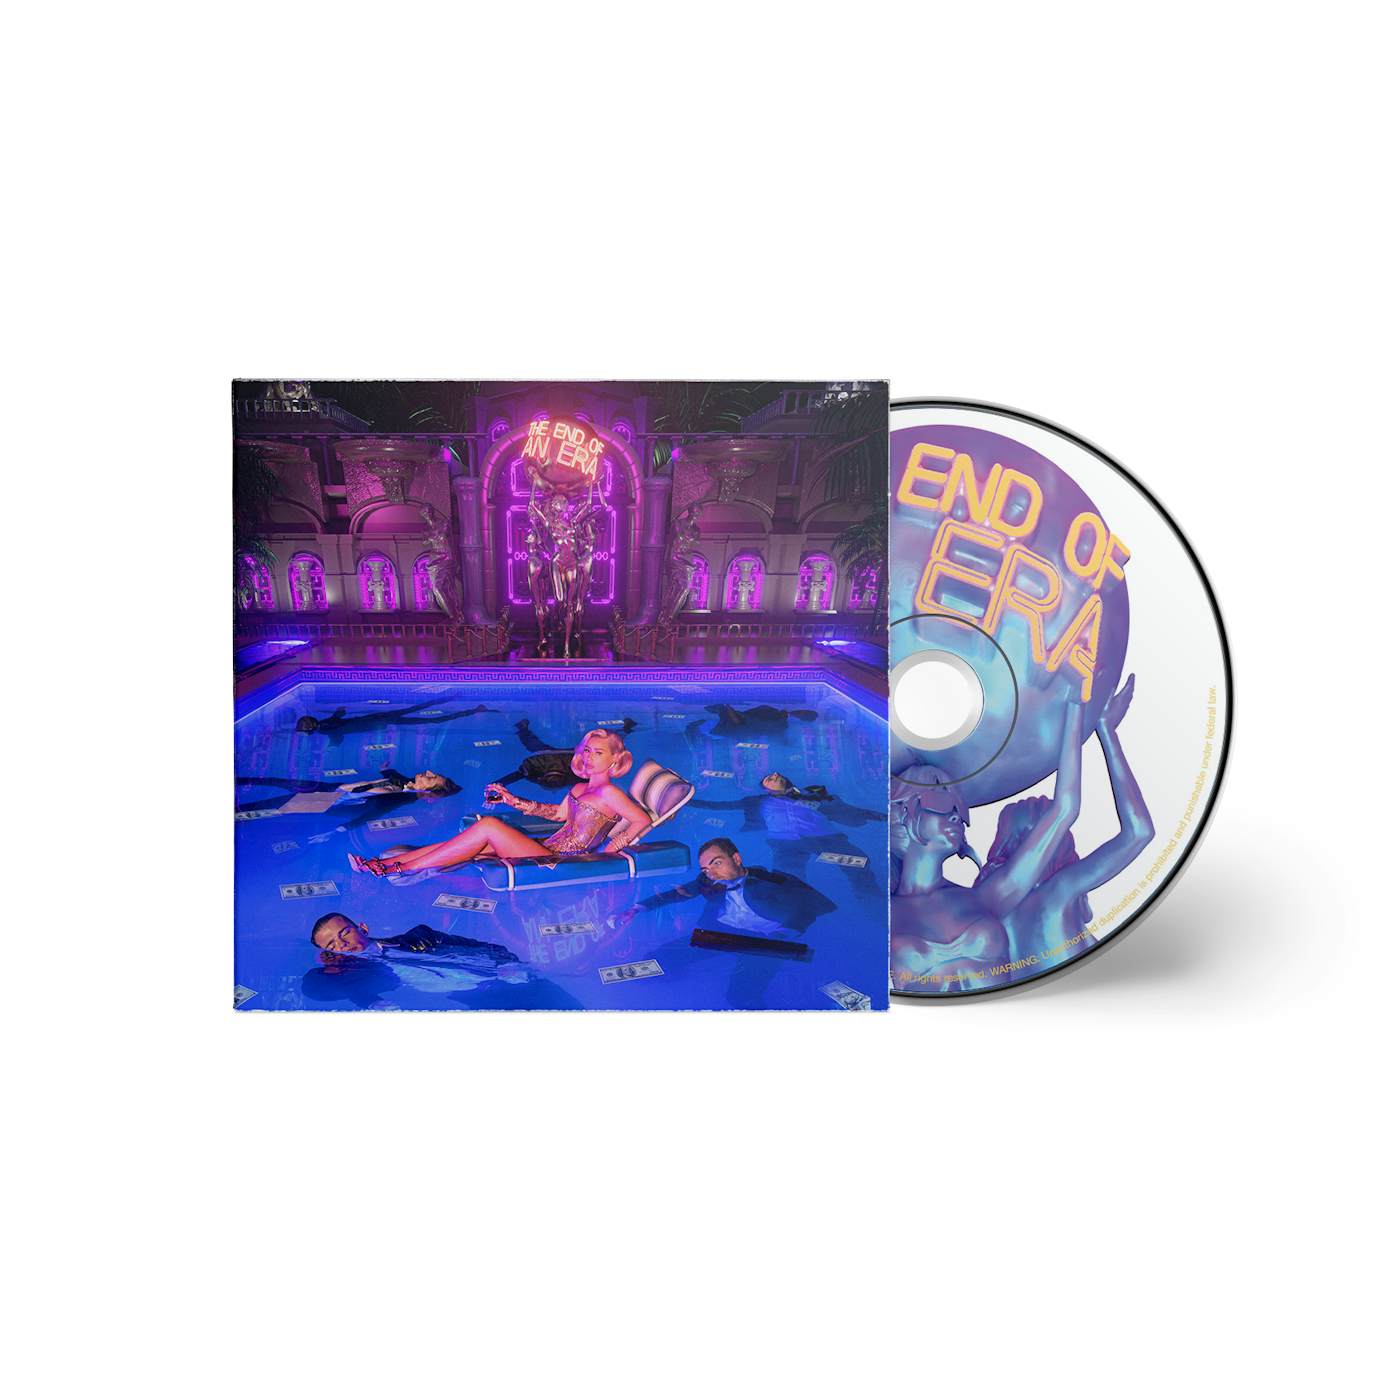 Iggy Azalea - The End of an Era (Deluxe) - CD SIGNED